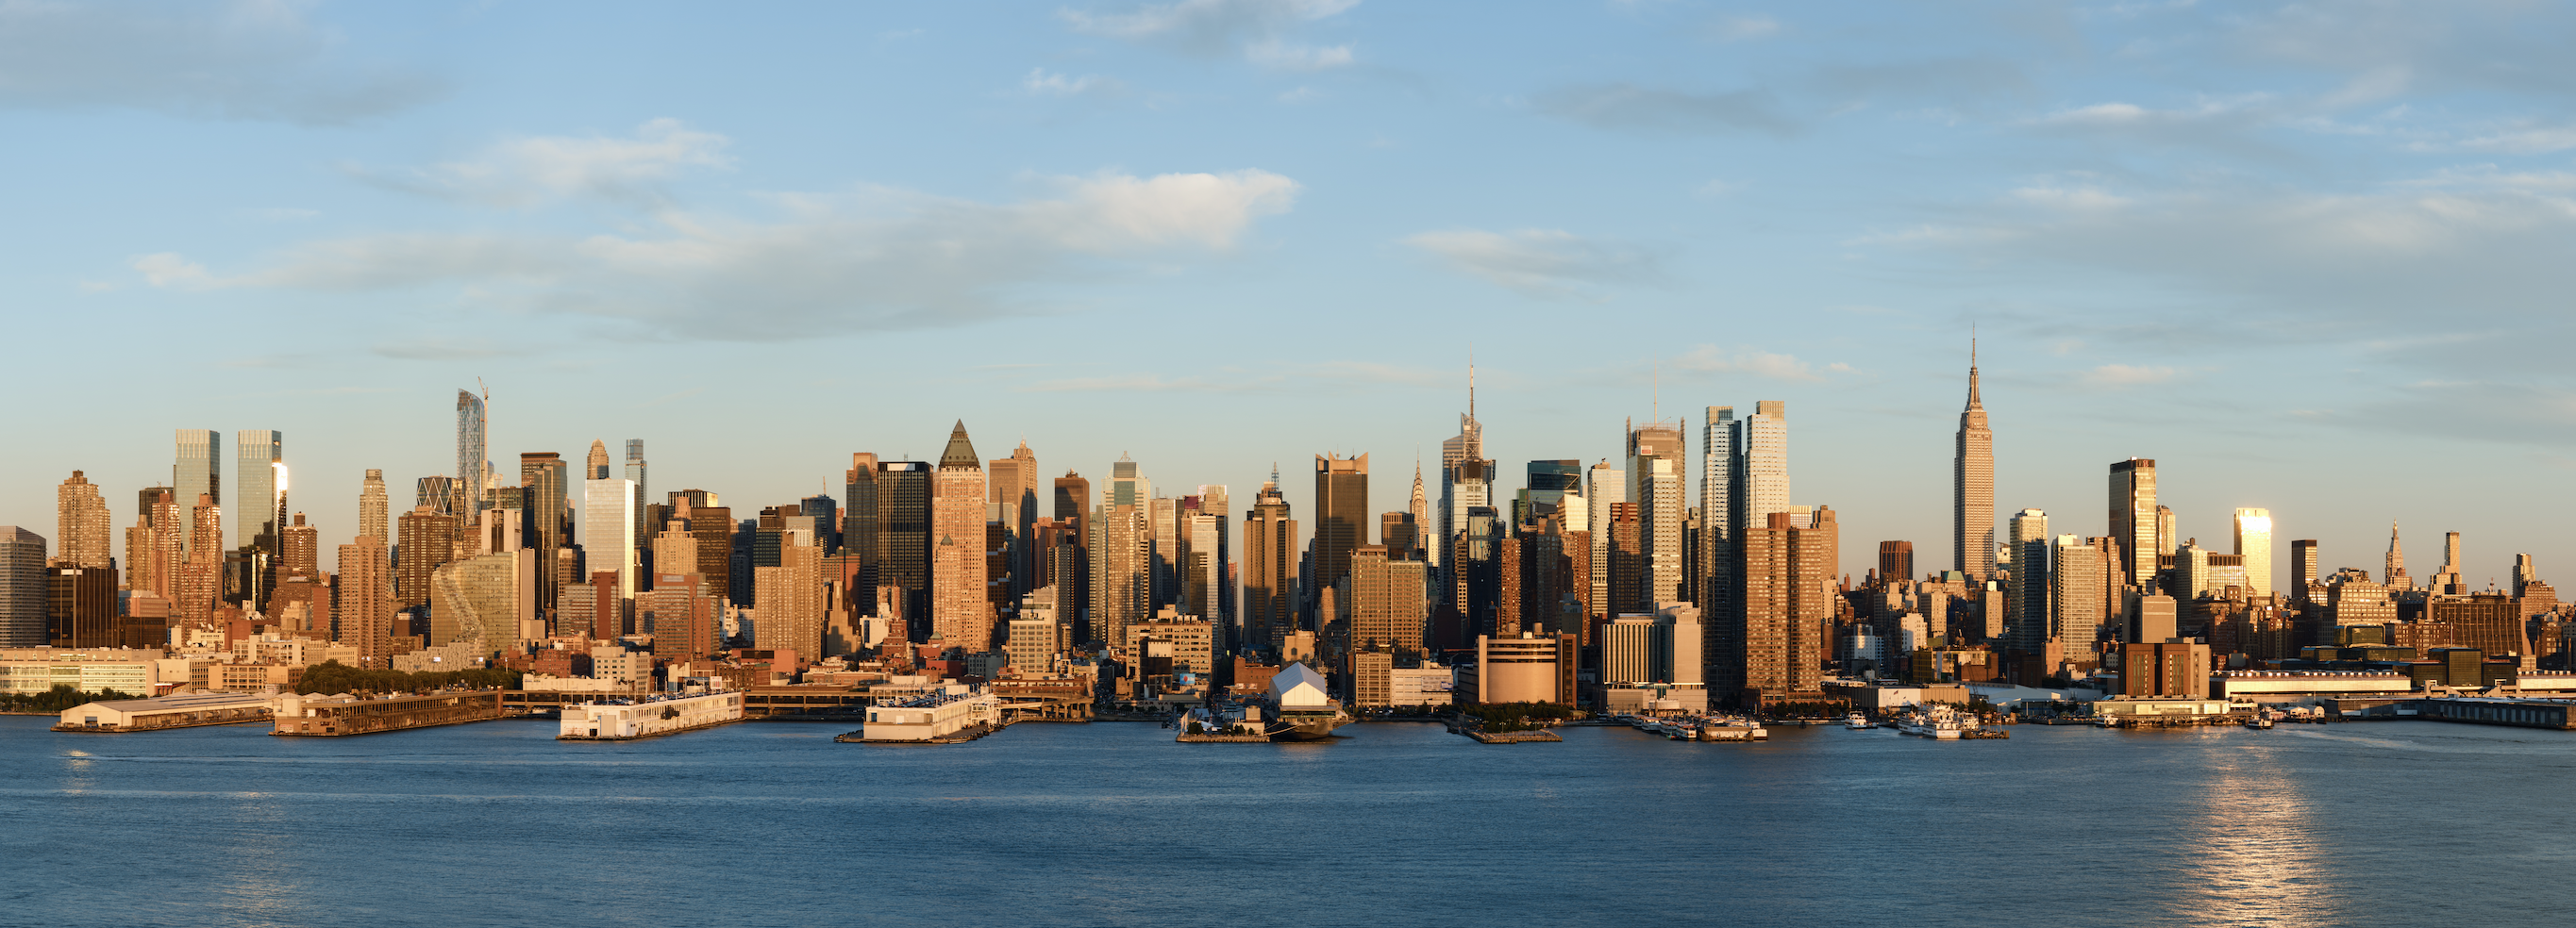 Image of the New York City Skyline